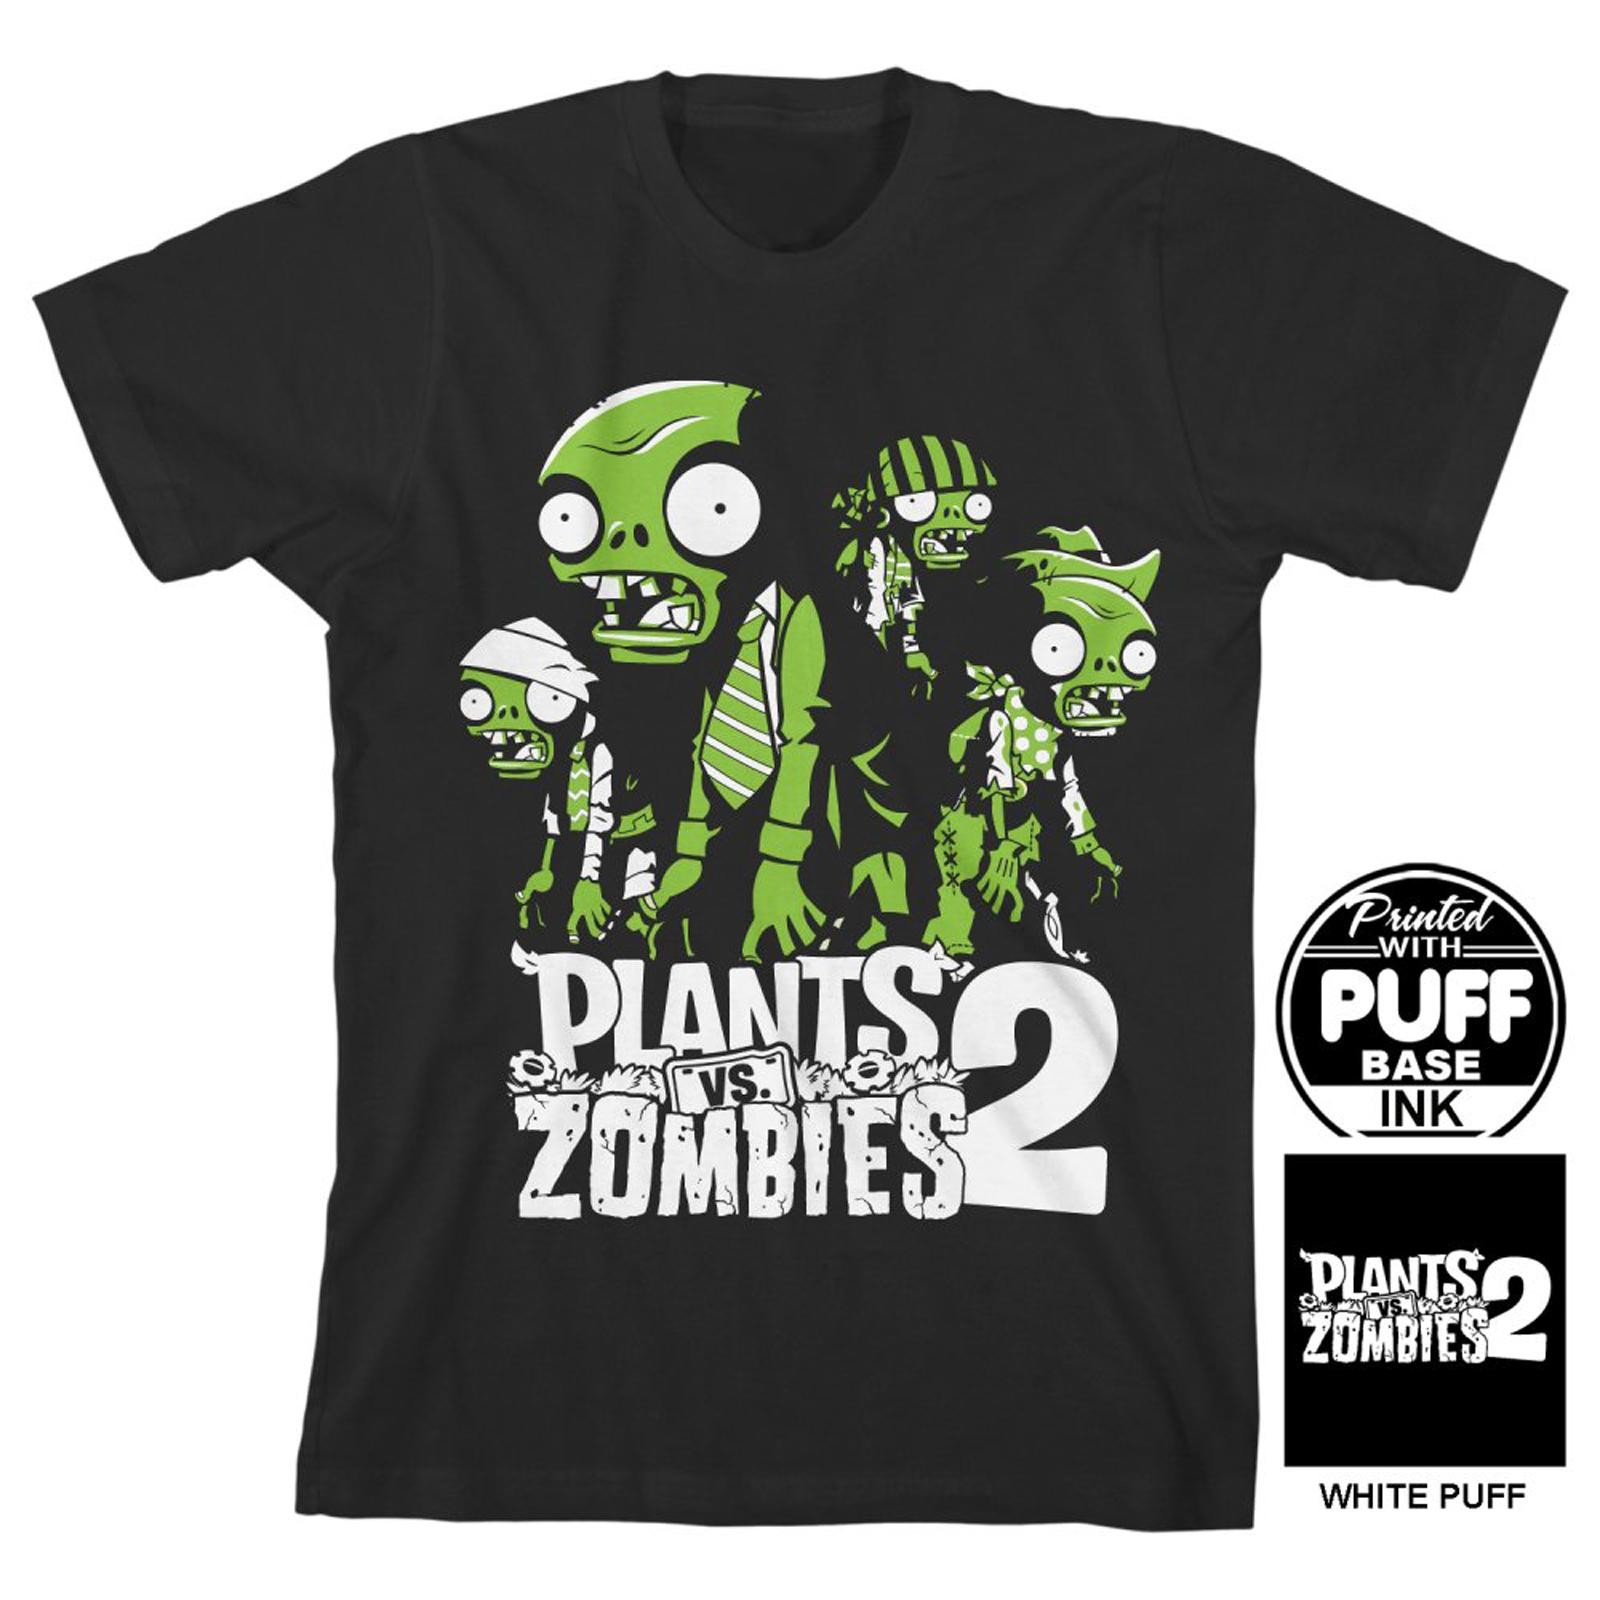 PopCap Games Boy's Graphic T-Shirt - Plants vs. Zombies 2